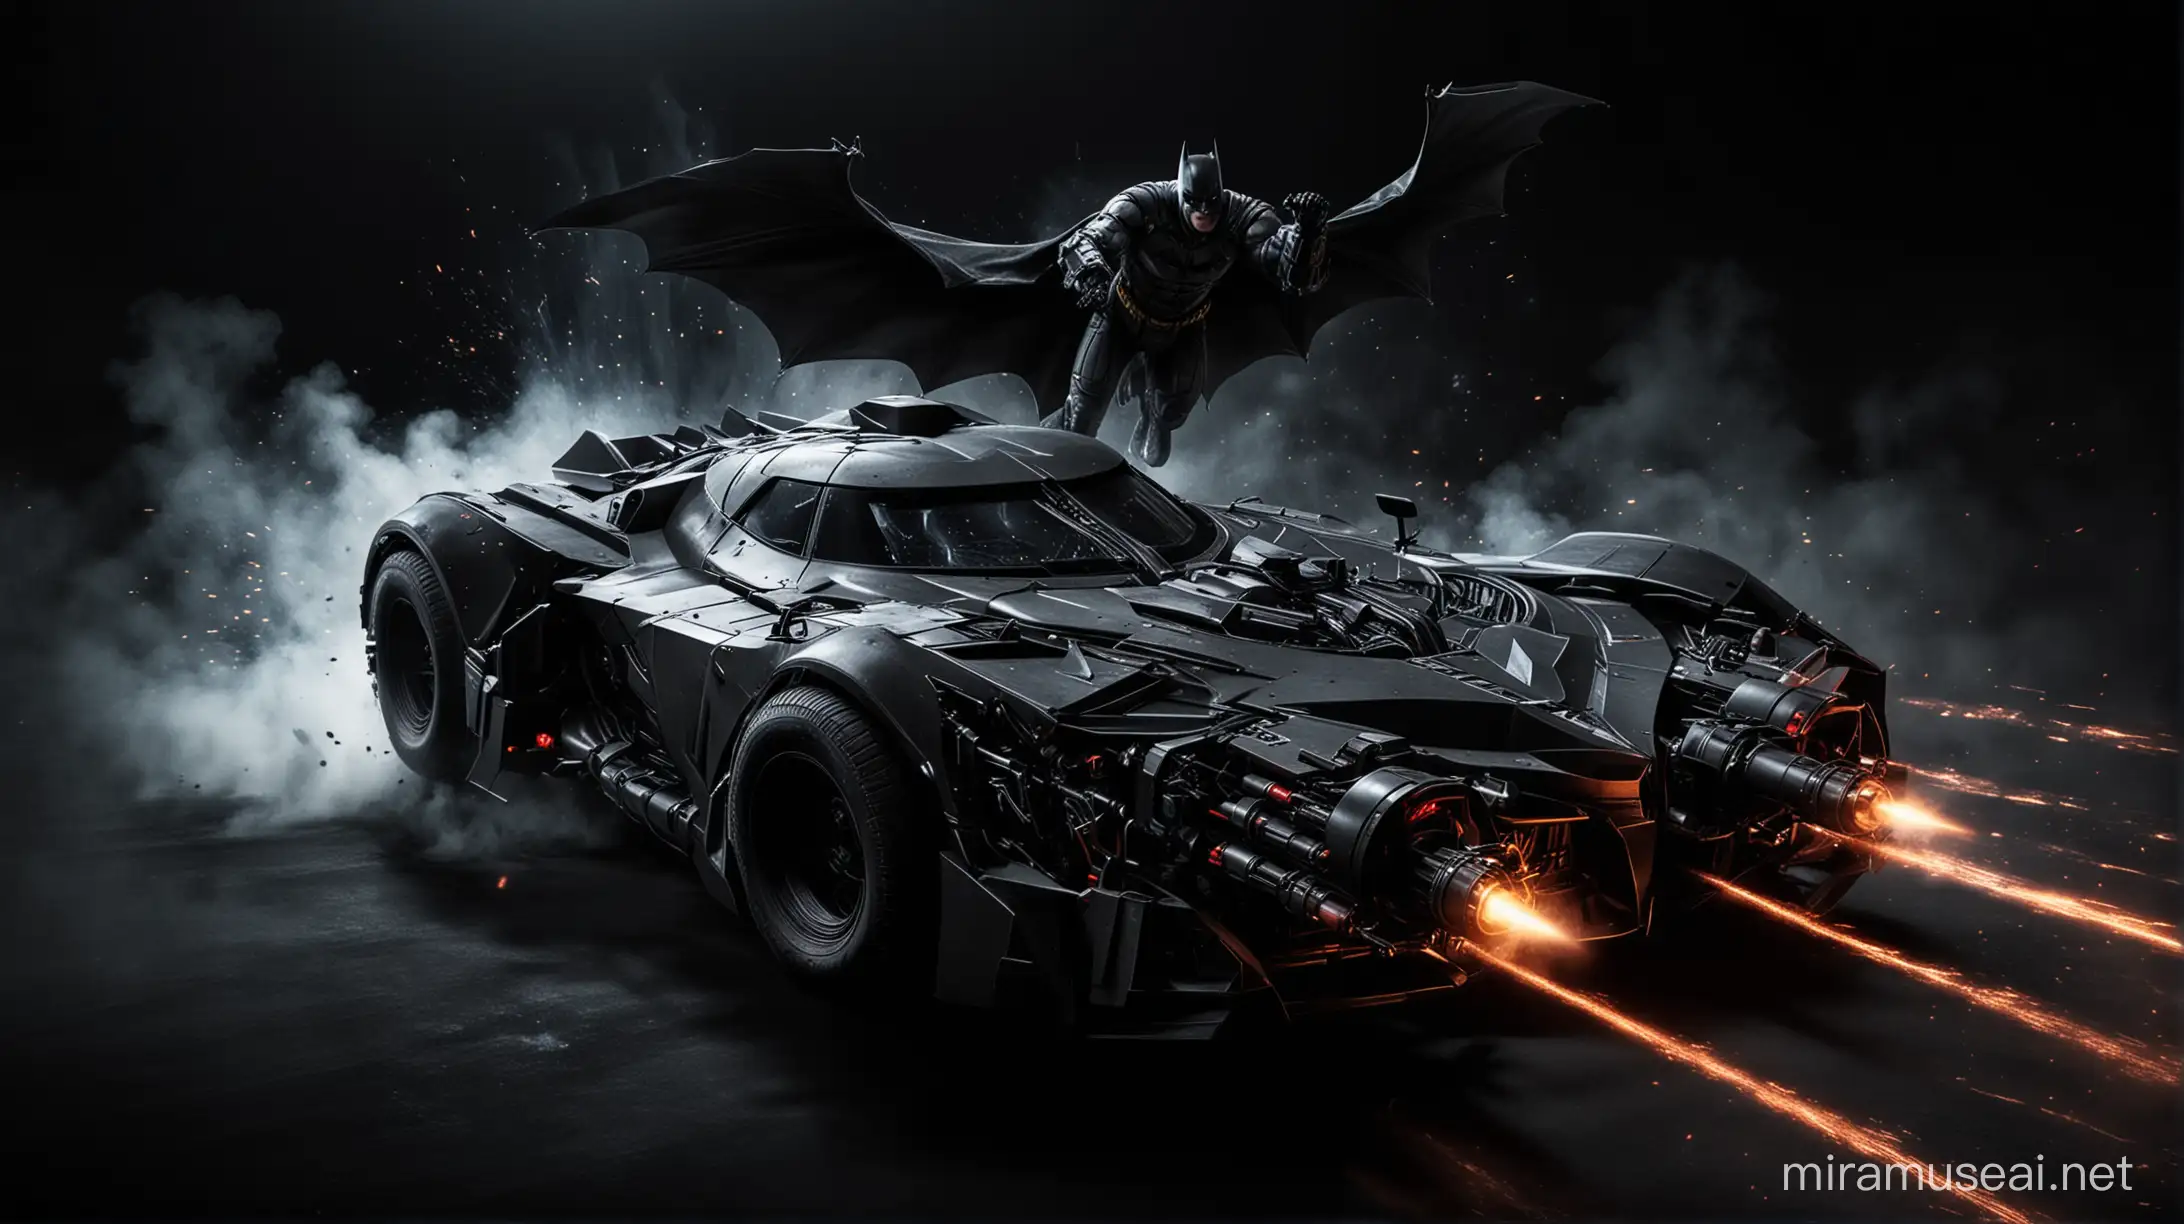 Batman Confronts Enemy in Nighttime Showdown with Batmobile